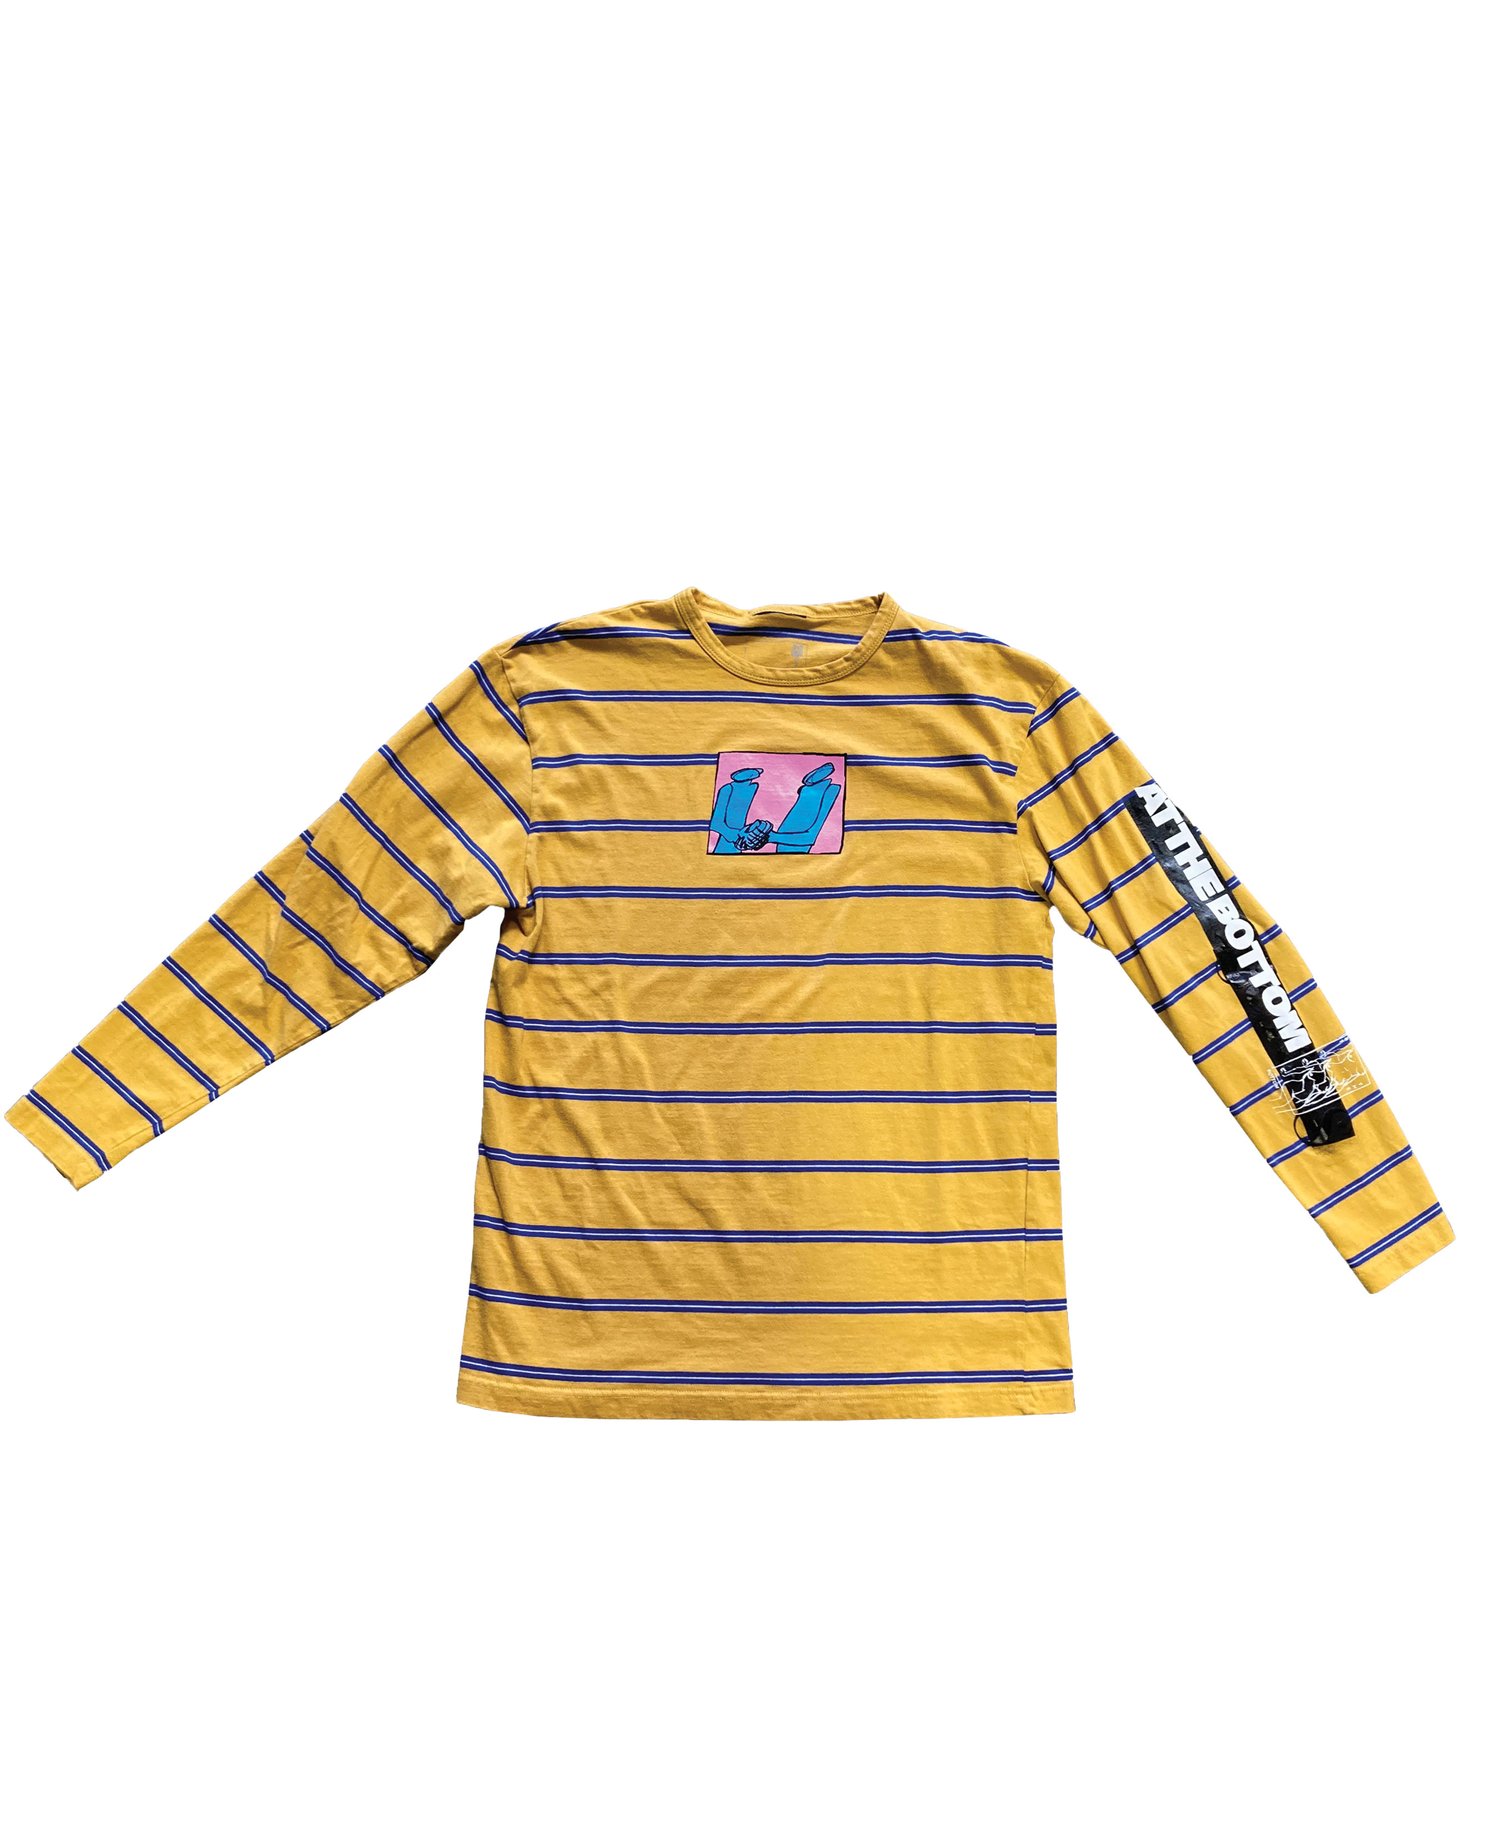 yellow striped long sleeve size medium